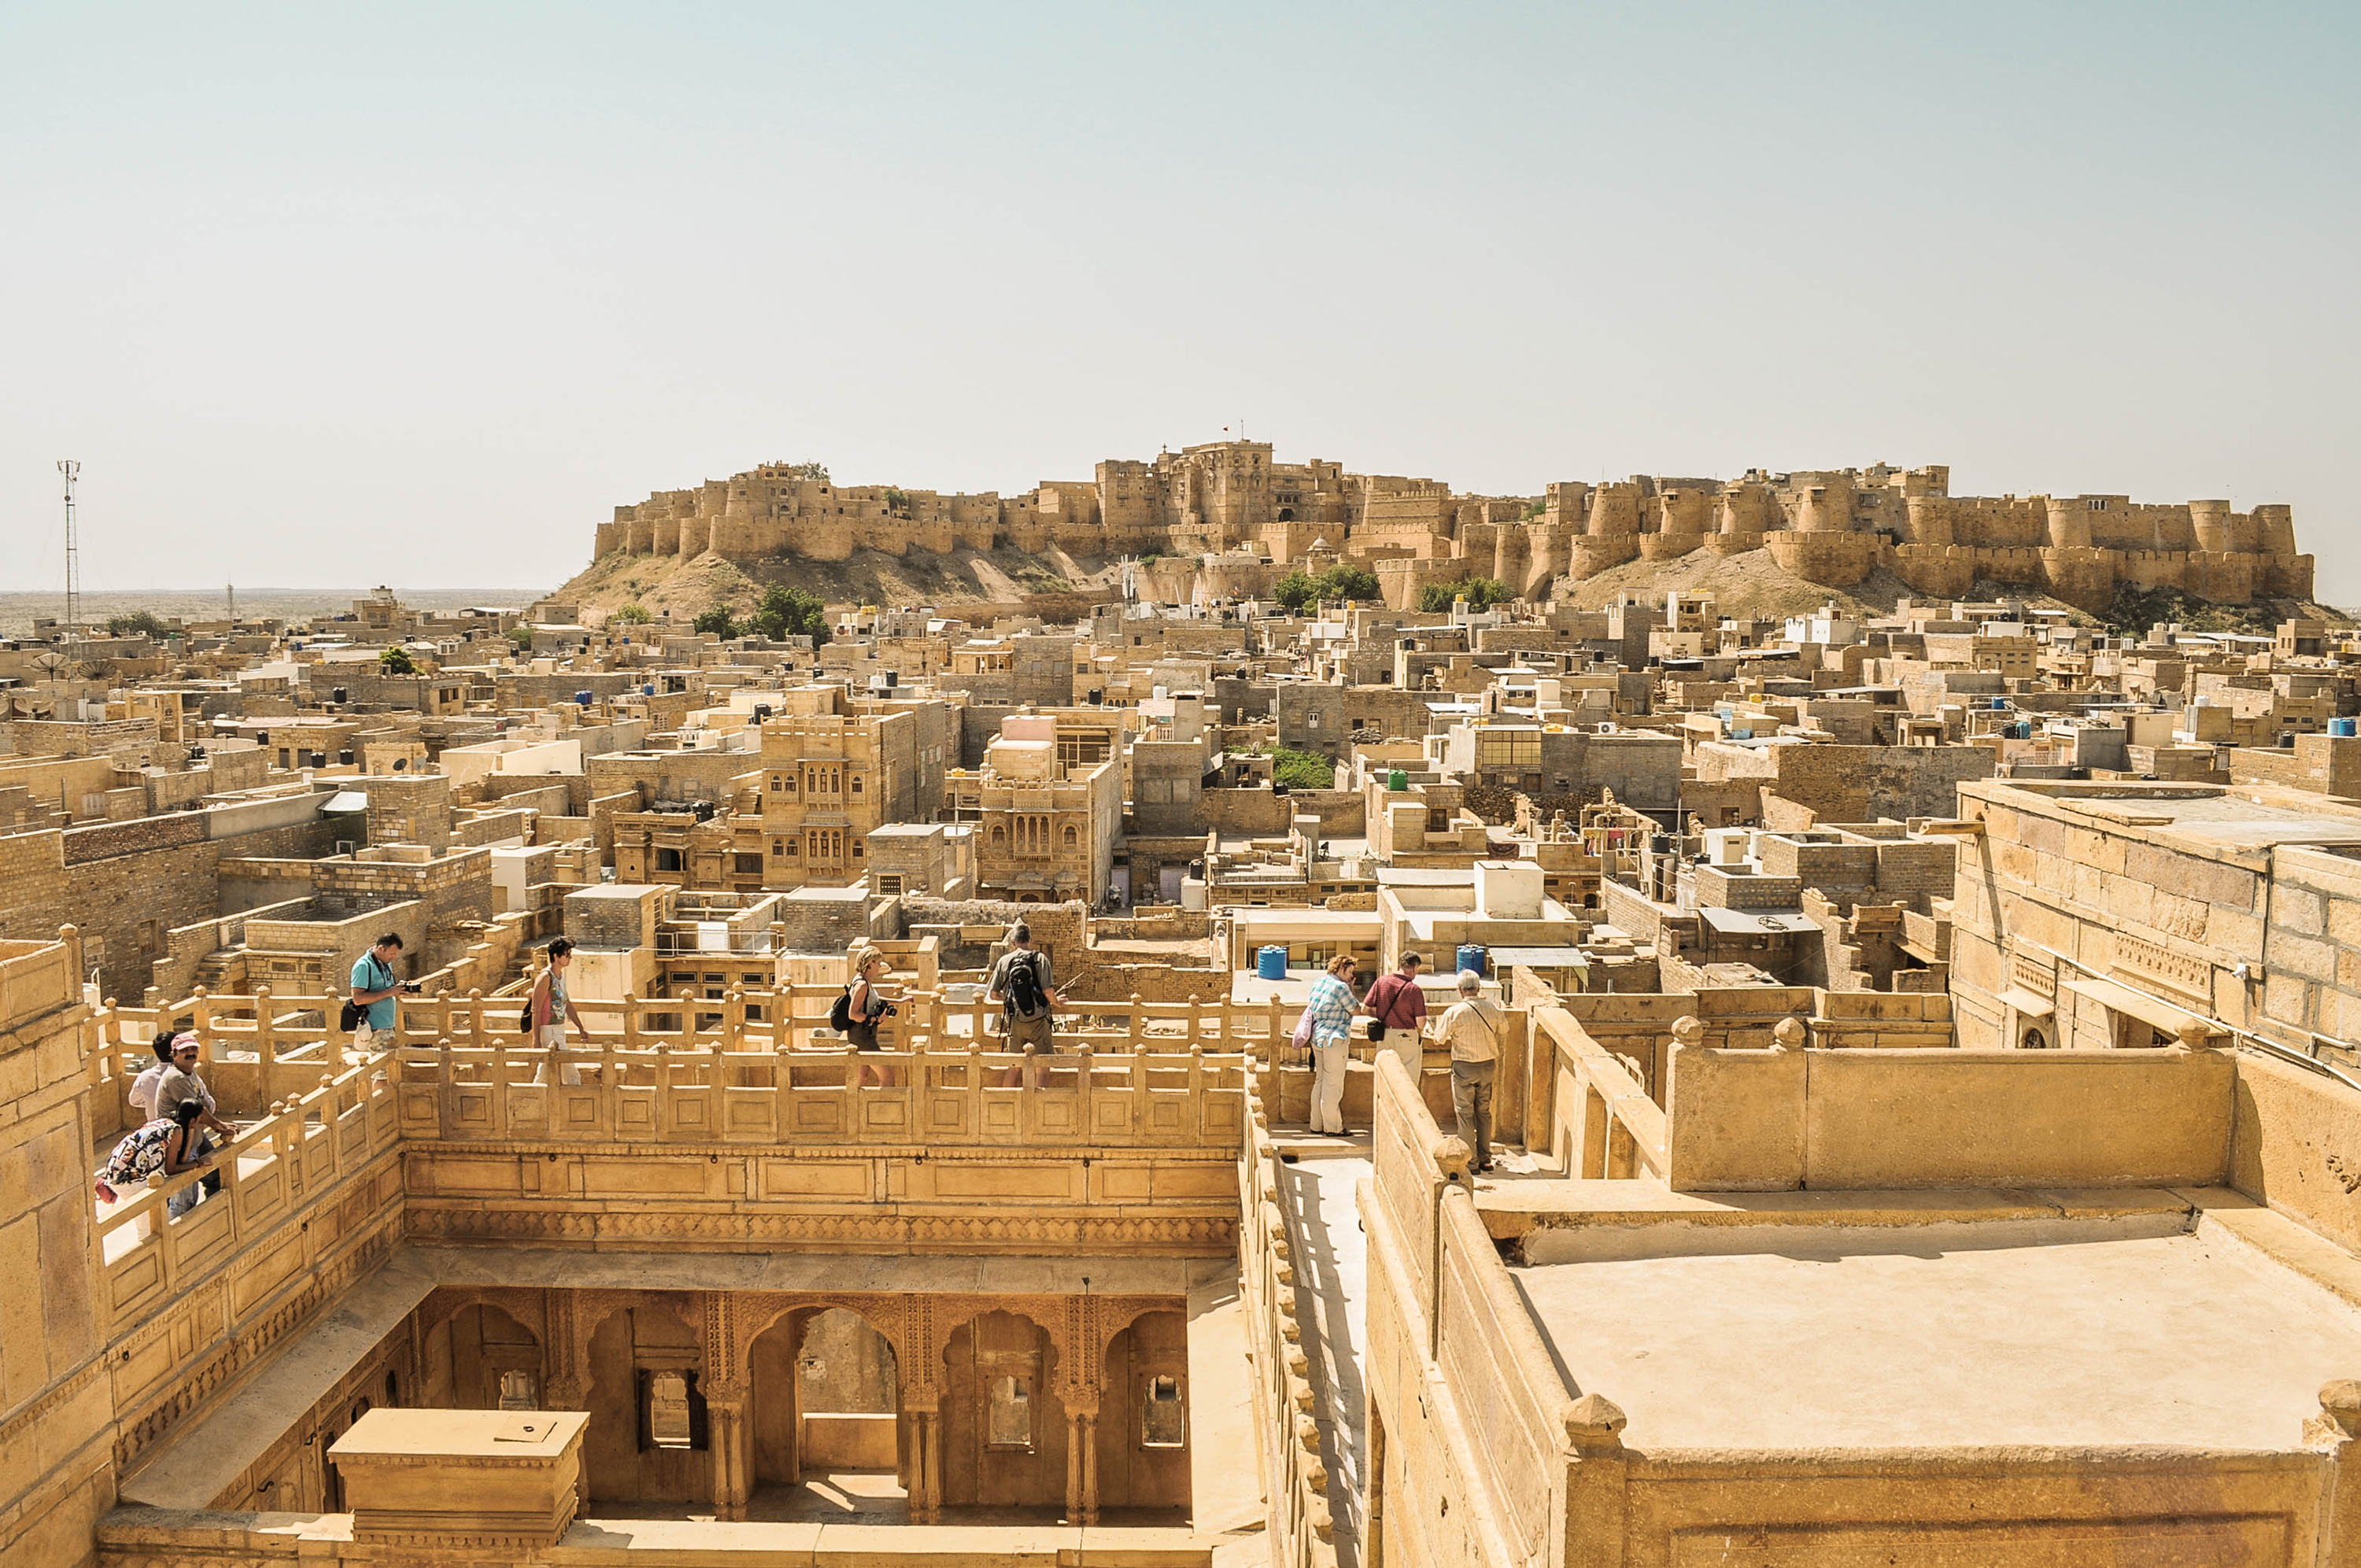 Vue sur le fort de Jaisalmer au Rajasthan en Inde